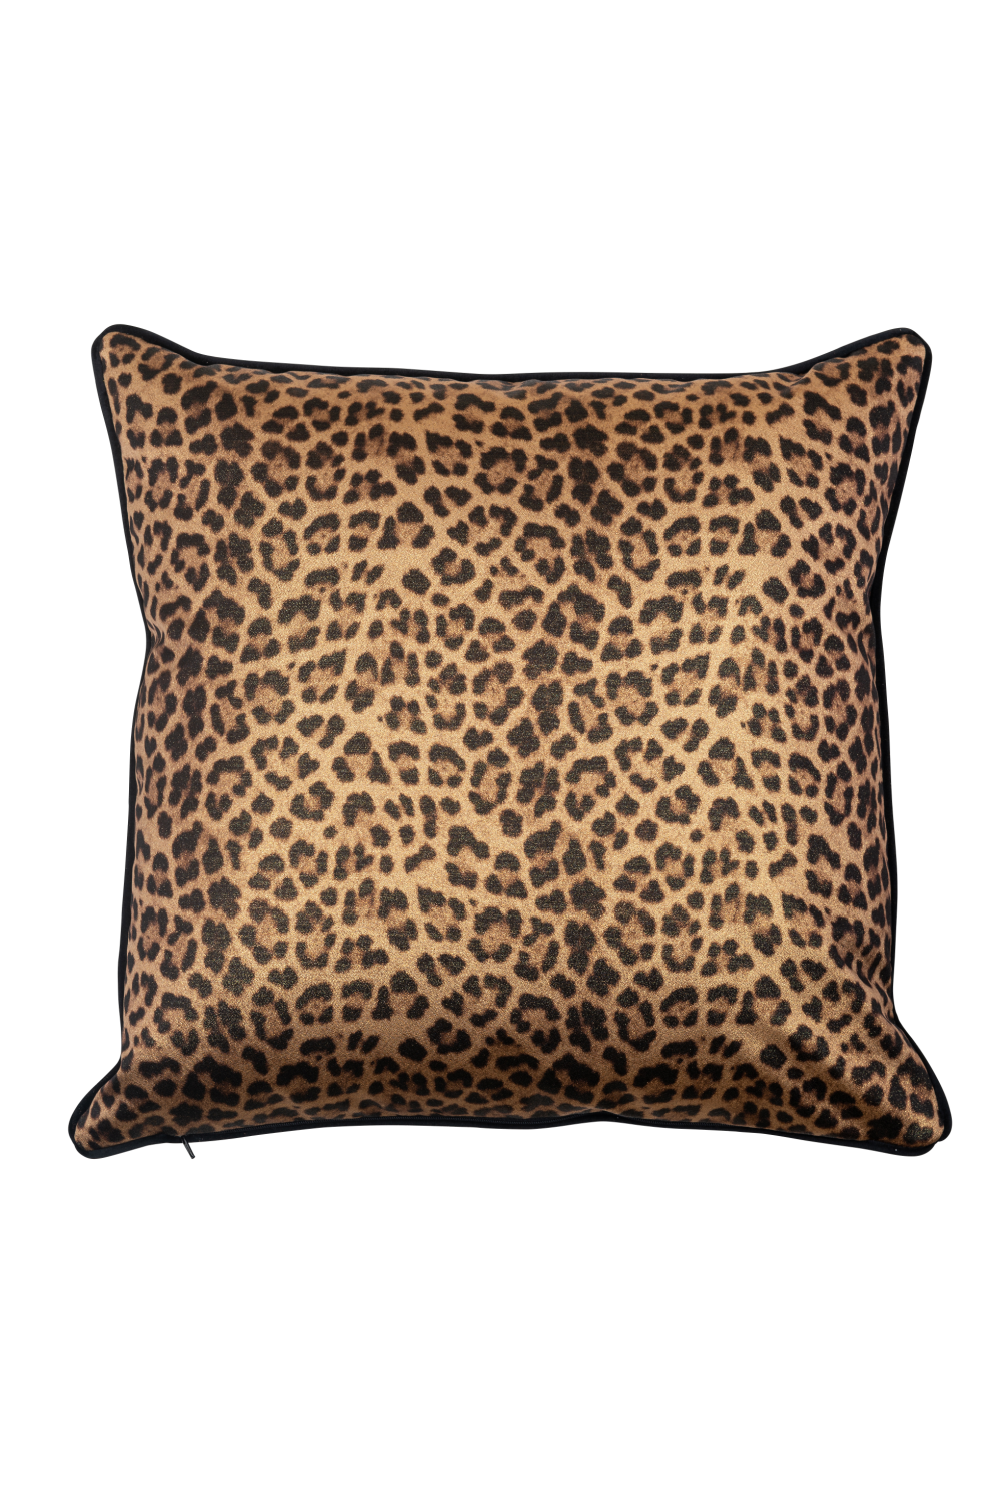 Leopard Print Throw Pillow | OROA Jess | OROA.com